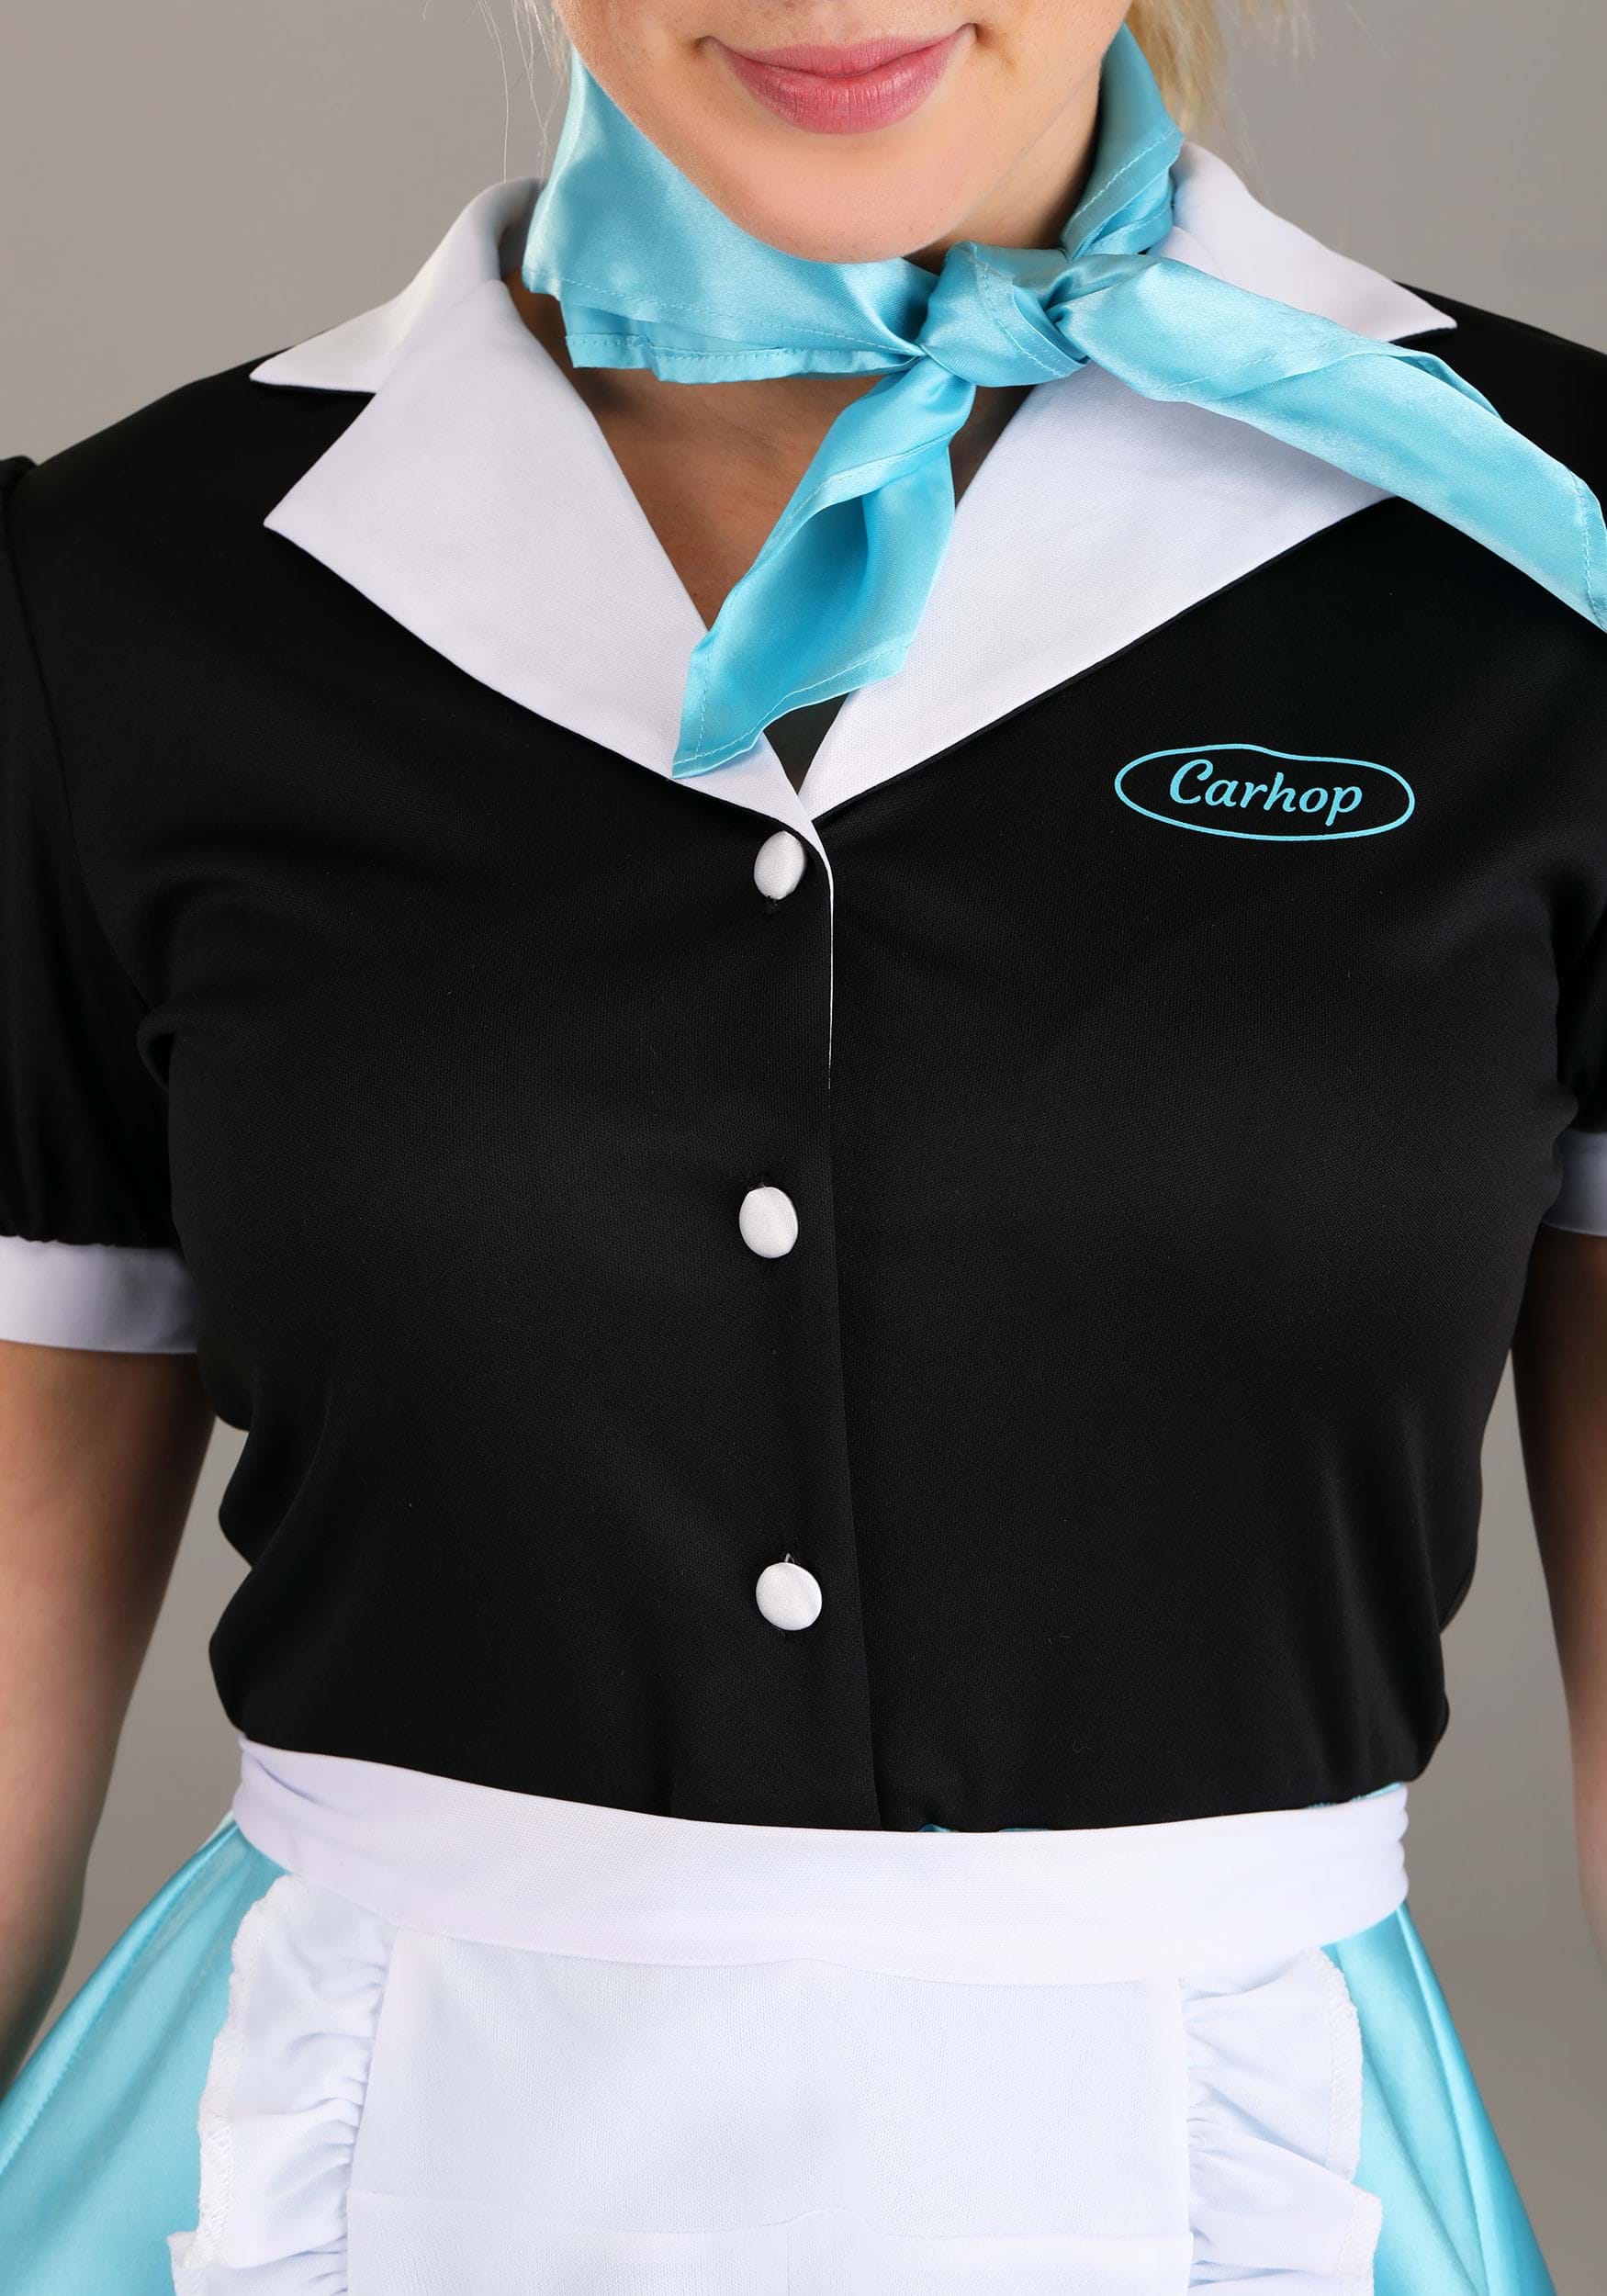 Car Hop Waitress Outfit Turquoise